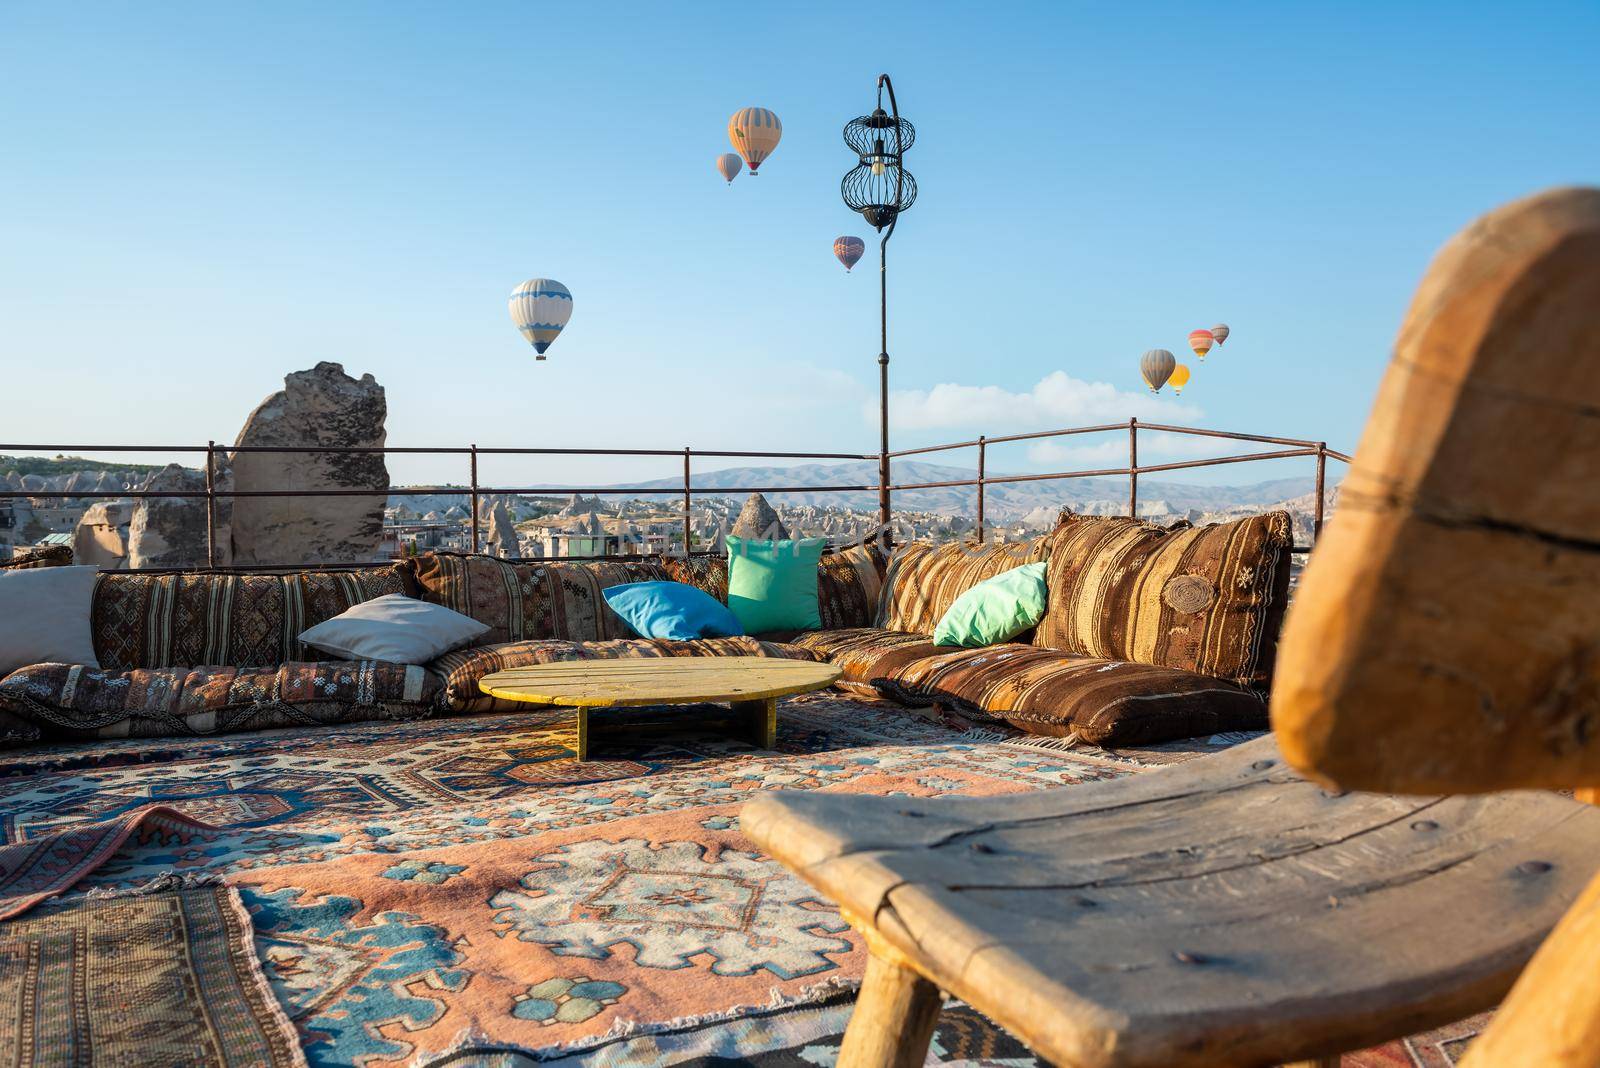 Terrace in Cappadocia by Givaga